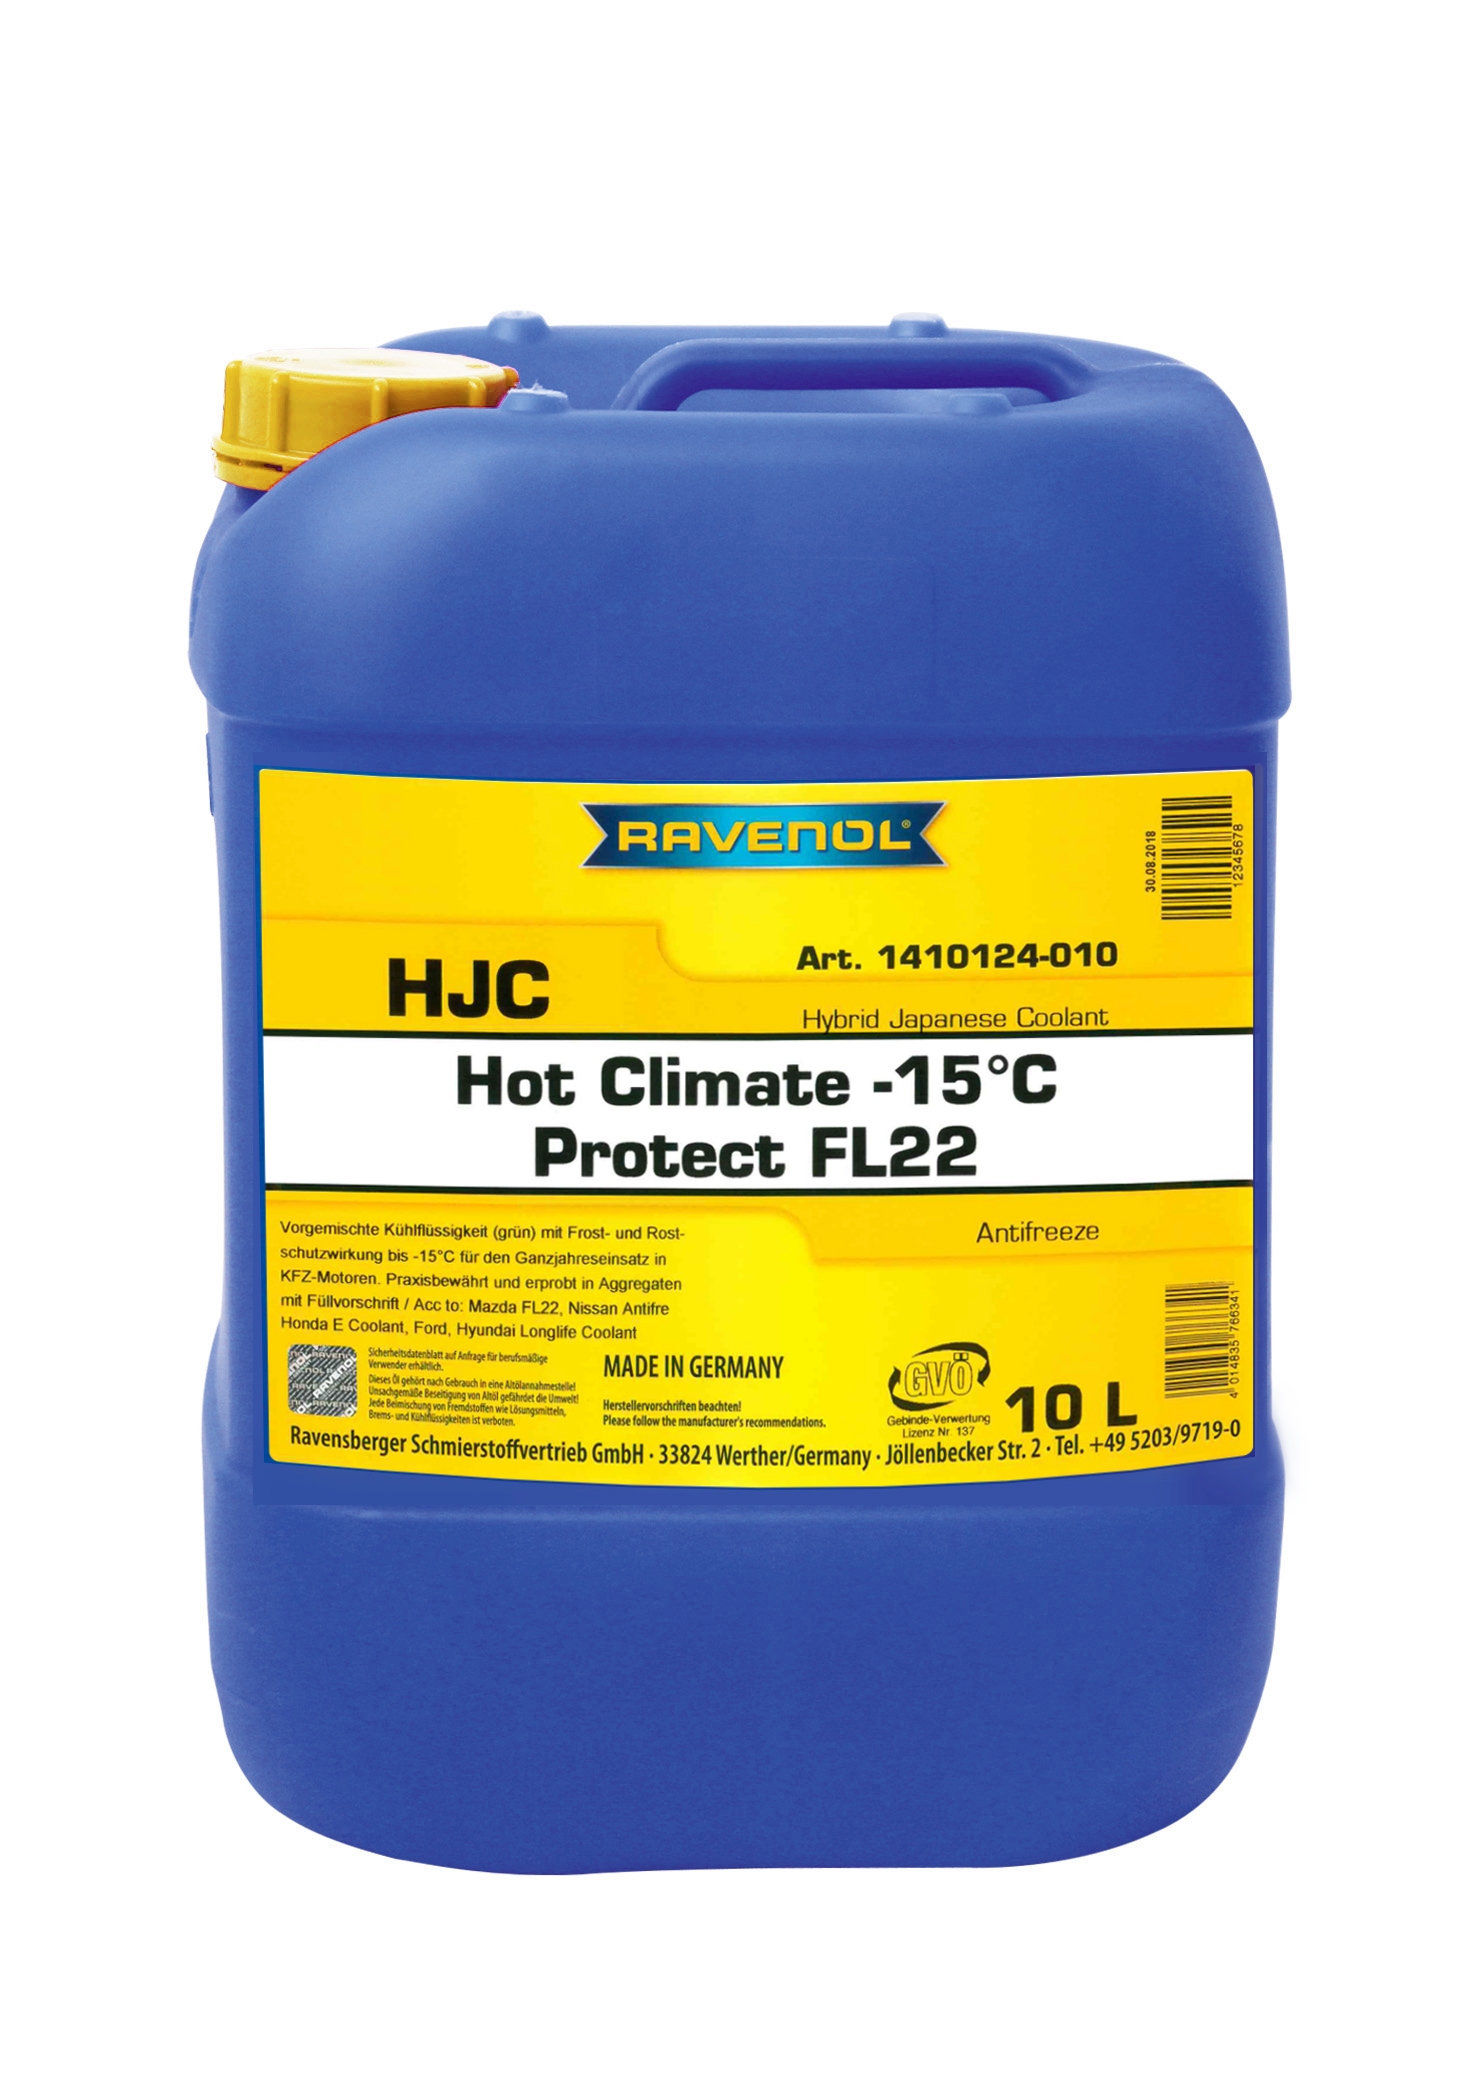 RAVENOL HJC HOT CLIMATE -15°C Protect FL22